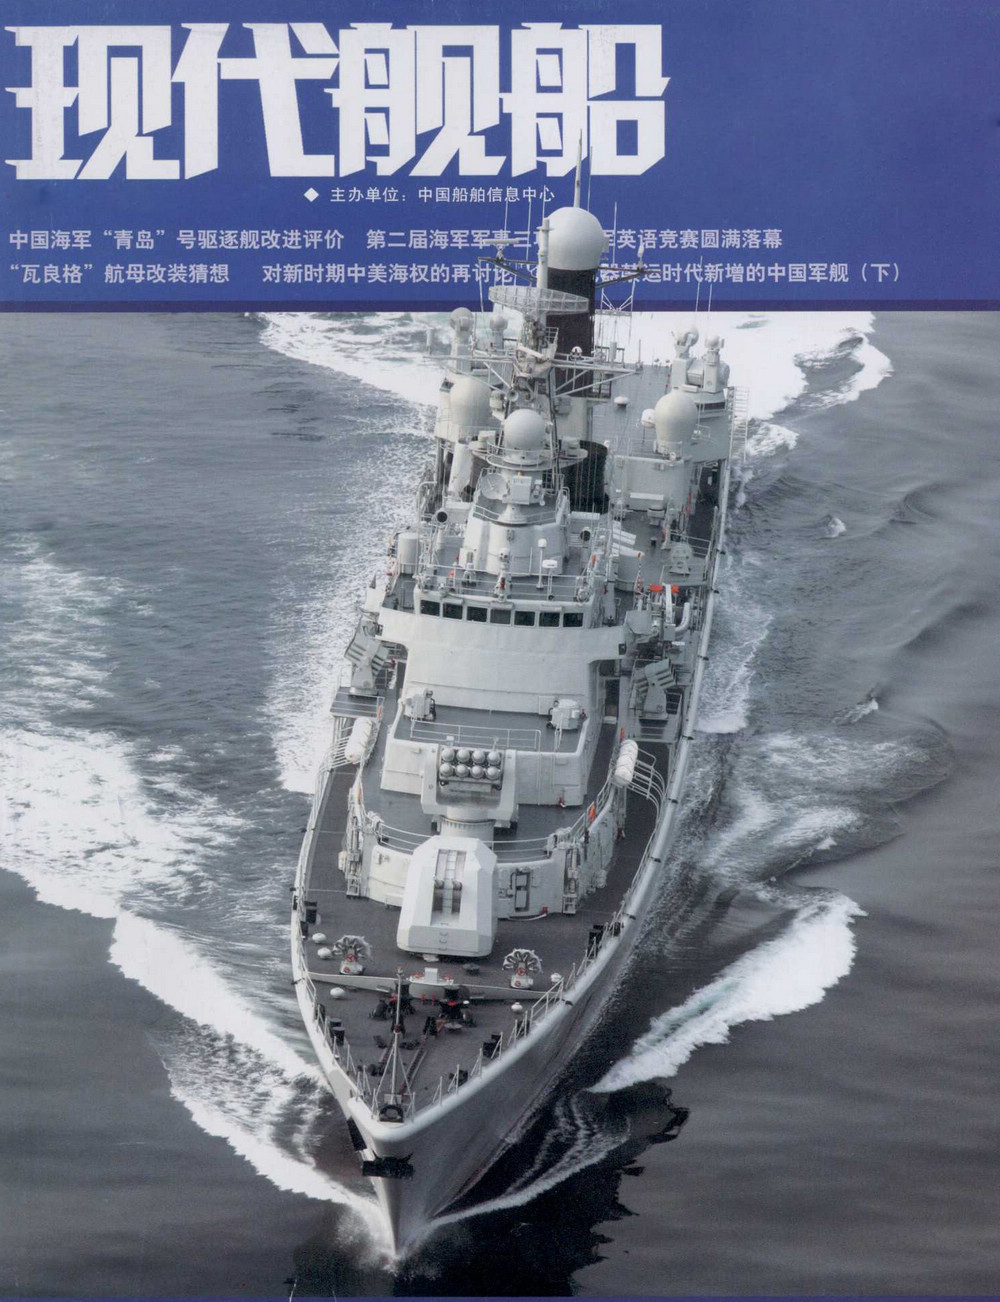 ARMADA DE CHINA - Página 2 112+Harbin+113+Qingdao+Type+052+Luhu-class+guided+missile+destroyers+people%2527s+Liberation+Army+Navy+%2528PLAN%2529+YJ-83+%2528C-803%2529+anti-ship+missiles+HQ-7+SAM+%2528Type+730%2529+7-barrel+30+mm+CIWS+%25287%2529